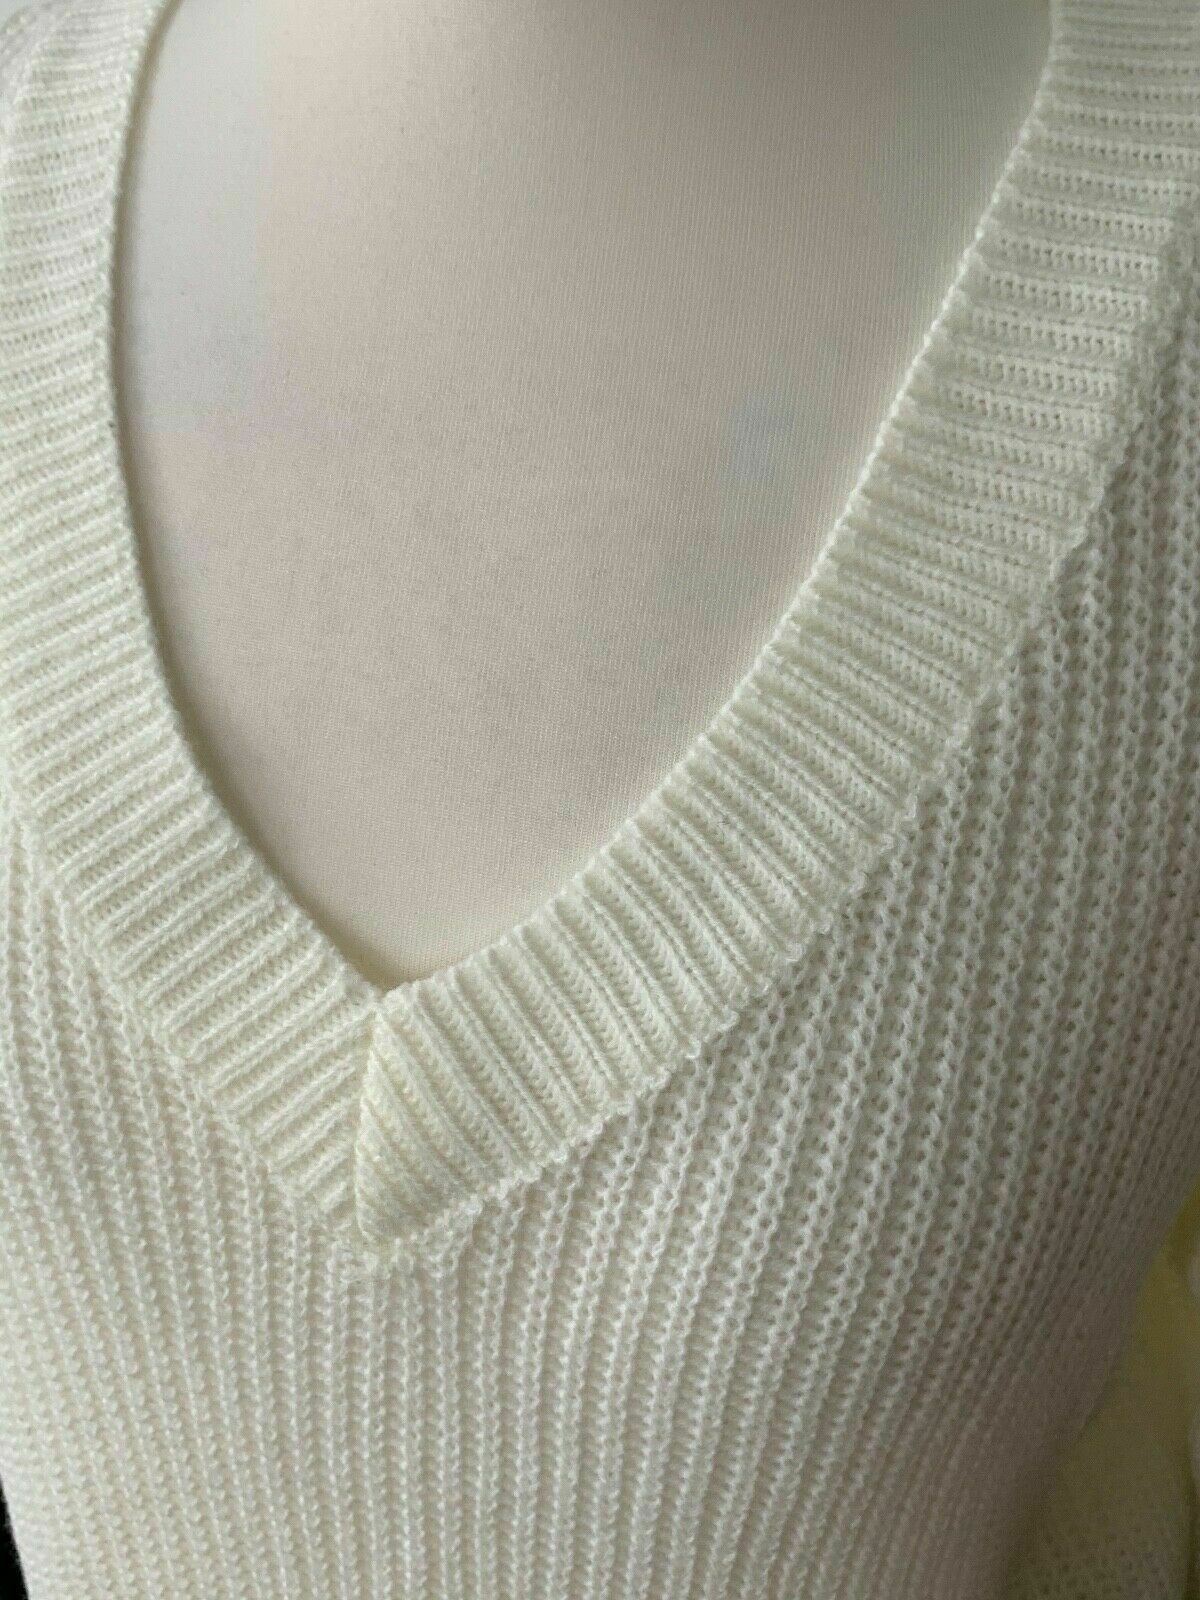 SHEIN Knit Sweater Striped Arms Size S 8 / 10 V-Neck Preppy Jumper